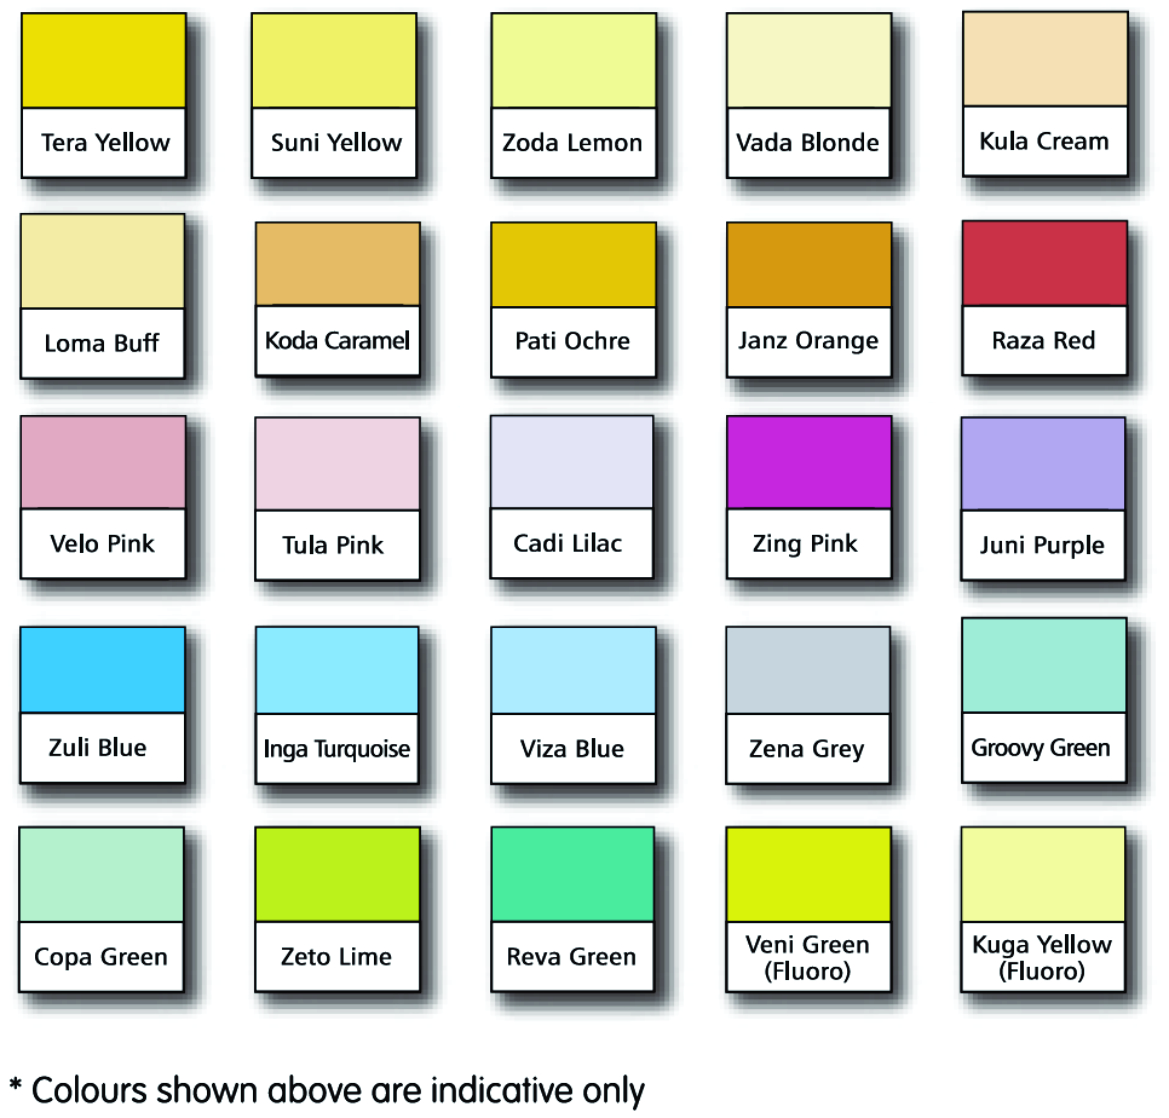 Optix Paper Colour Chart